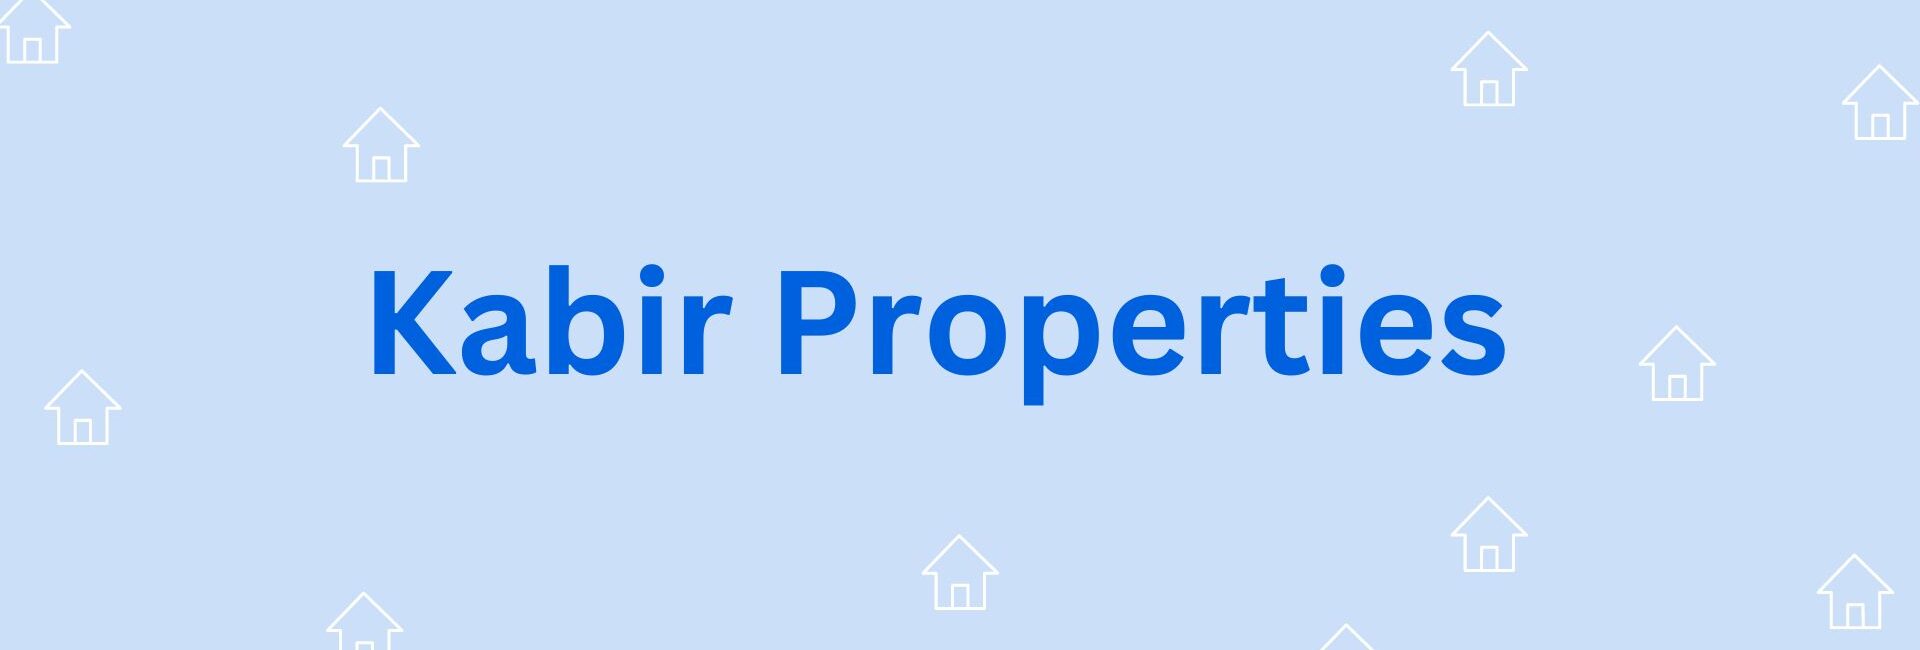 Kabir Properties - Property Dealer in Hisar